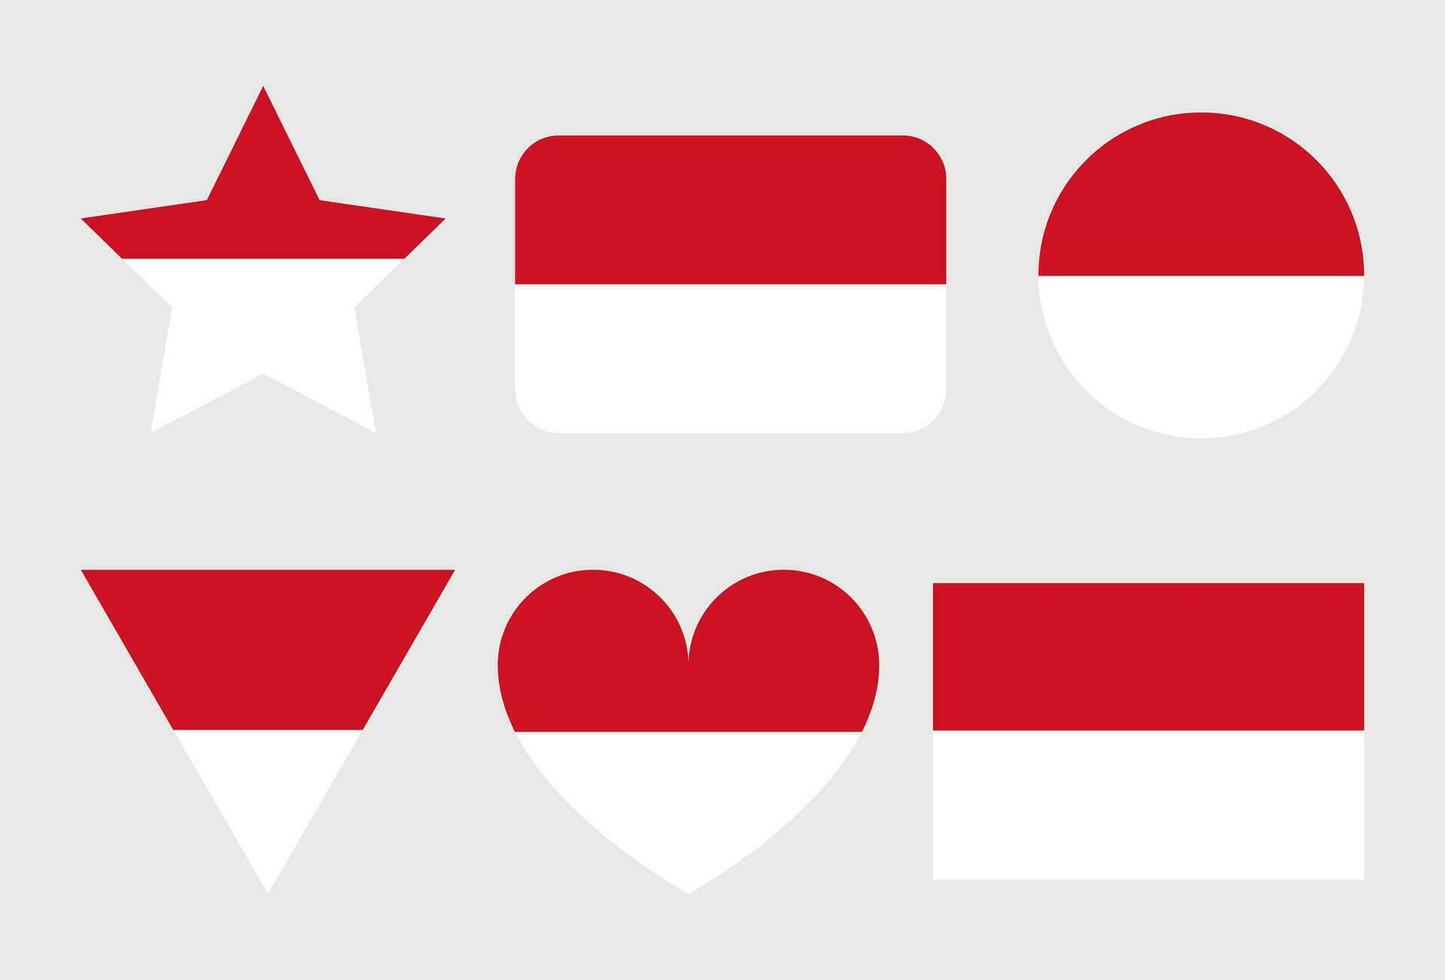 Monaco flag vector icons set of illustrations